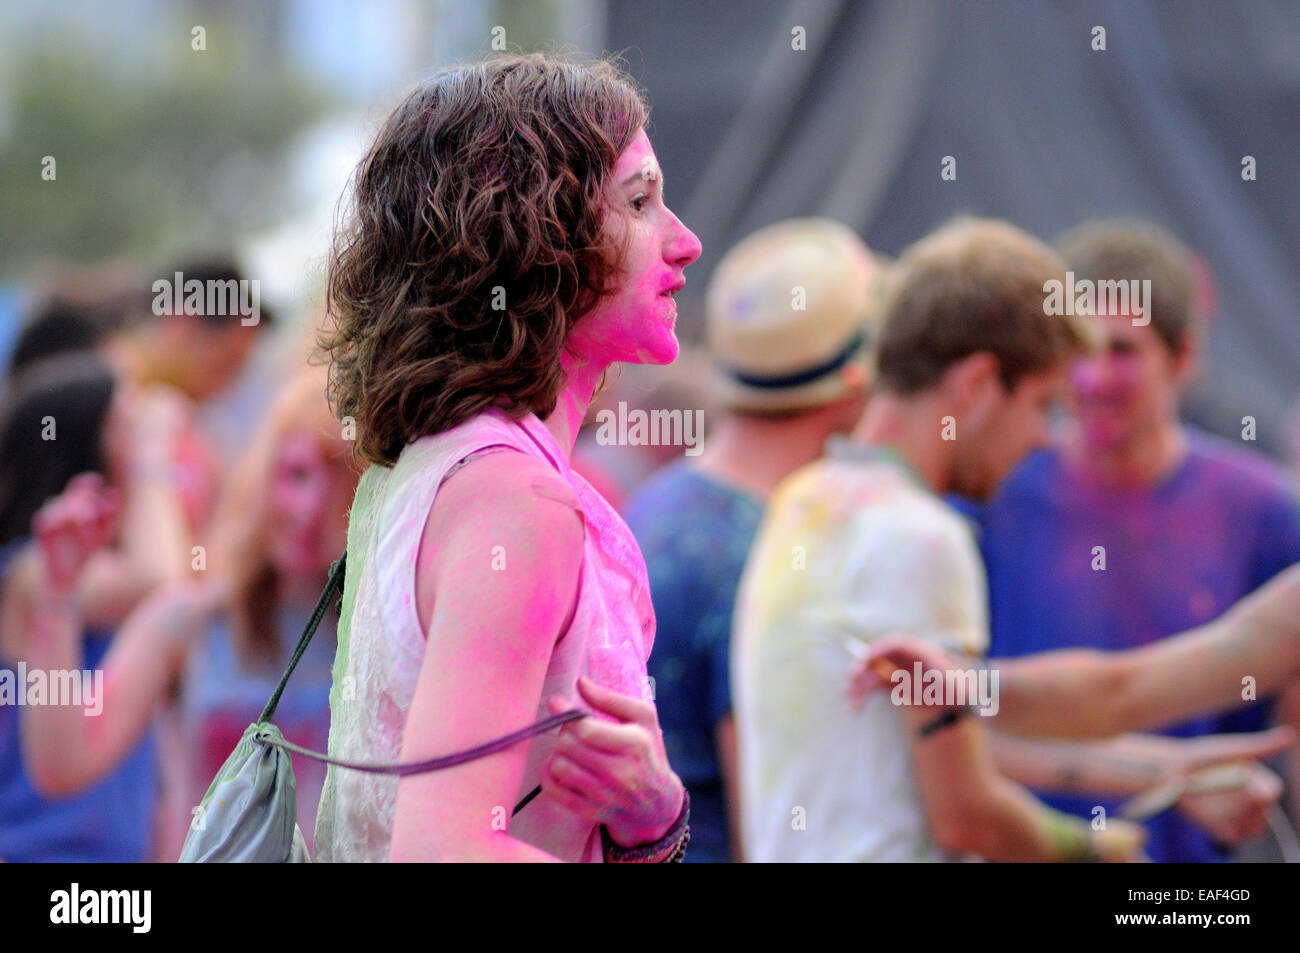 BENICASIM, Spanien - Juli 21: Menschen bei der Pringles Holi Farben Party im FIB (Festival Internacional de Benicassim) Festival. Stockfoto